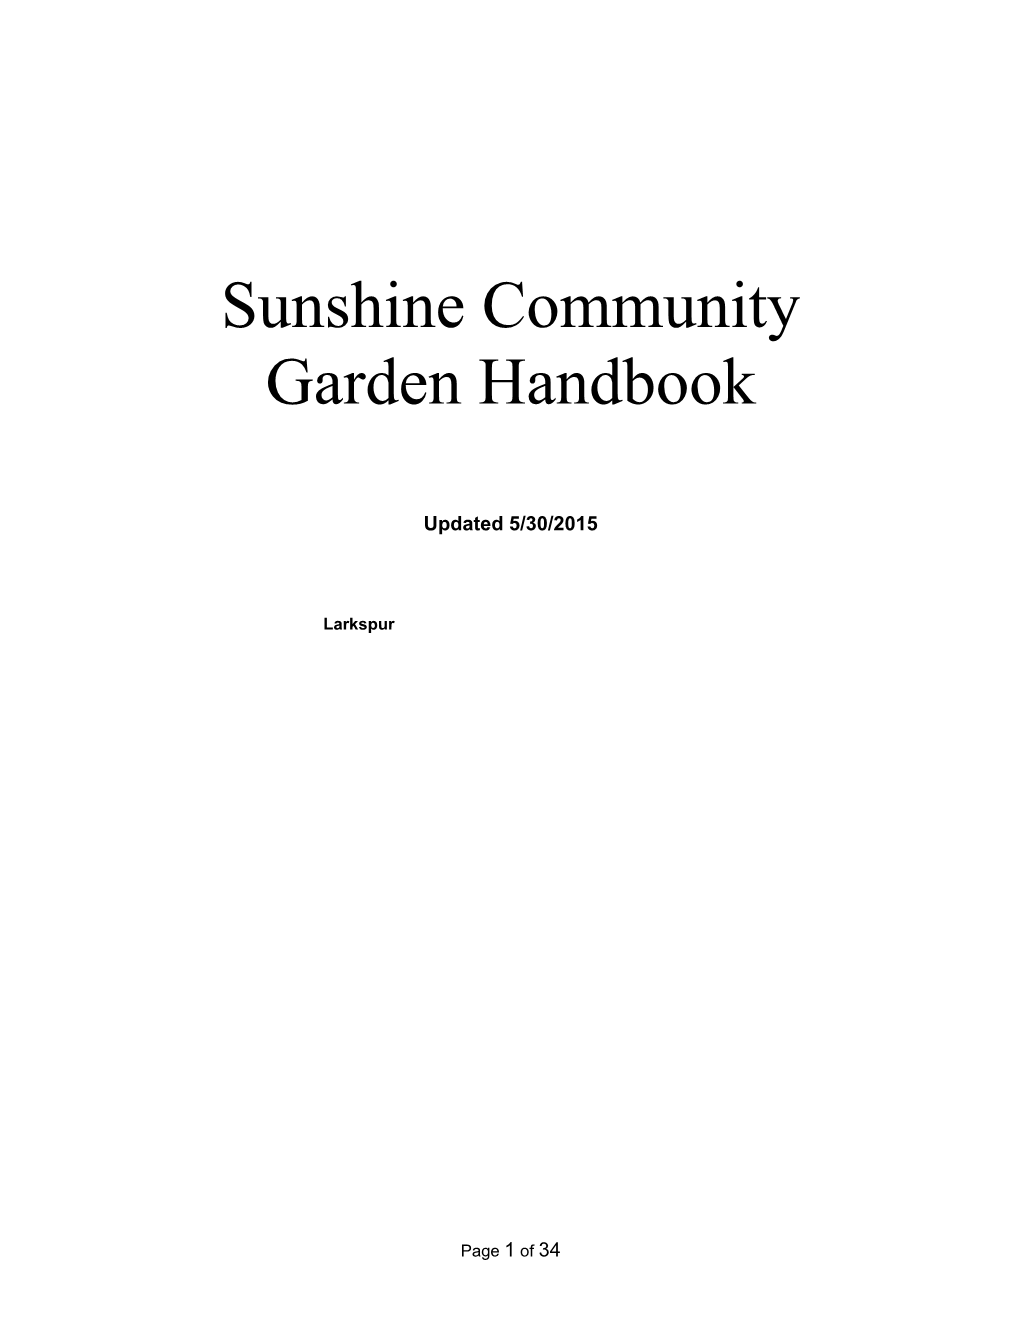 Sunshine Community Garden